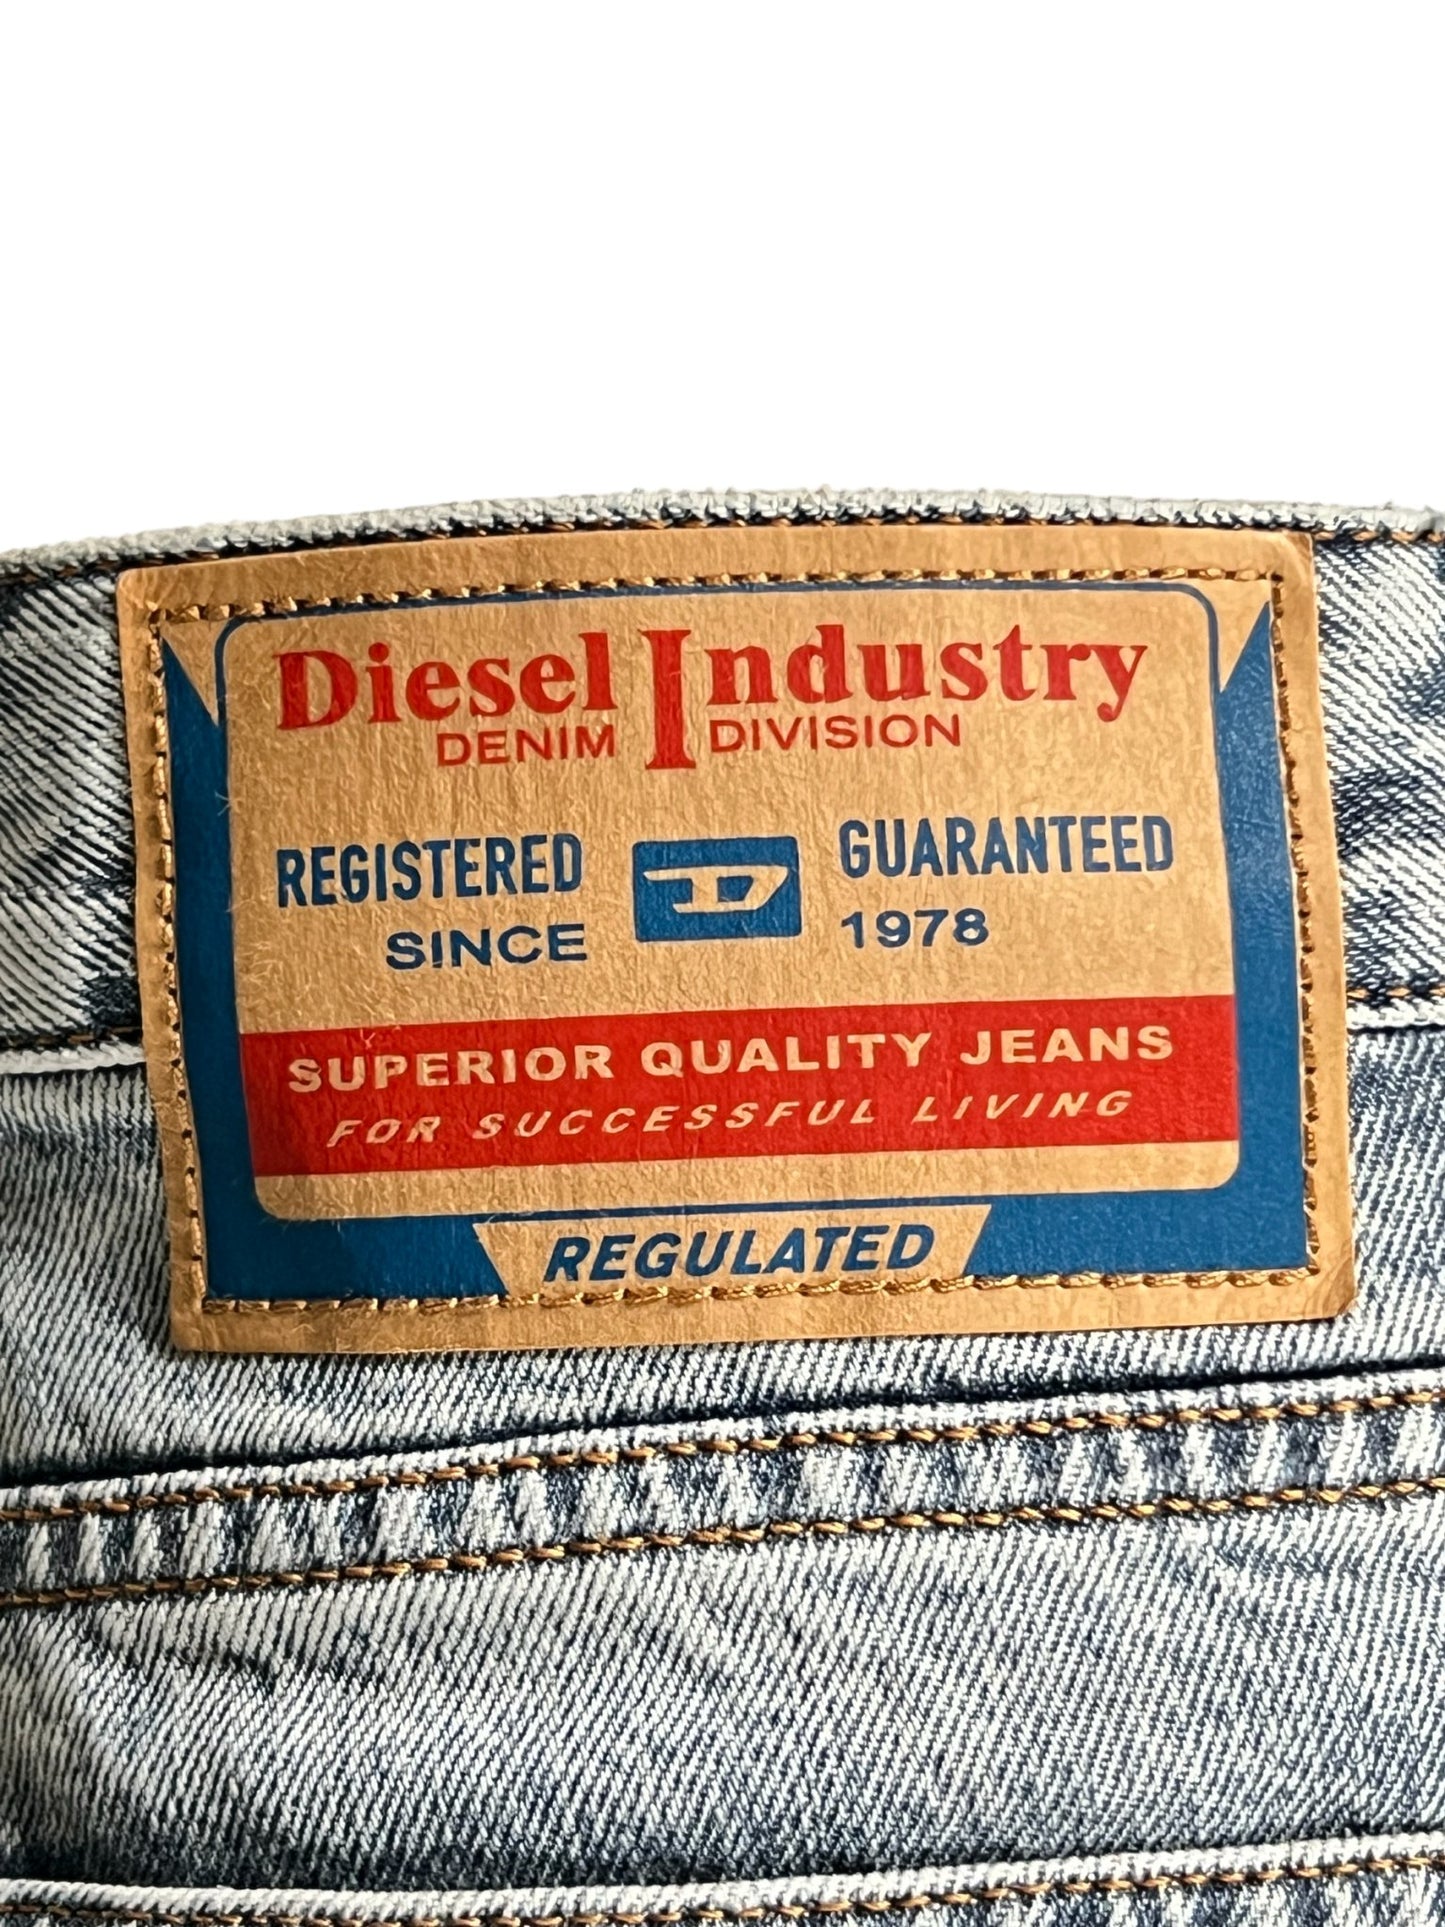 Brown leather label on light wash denim jeans displaying the Diesel 1955 D-REKIV-S1 9160 brand logo and information.